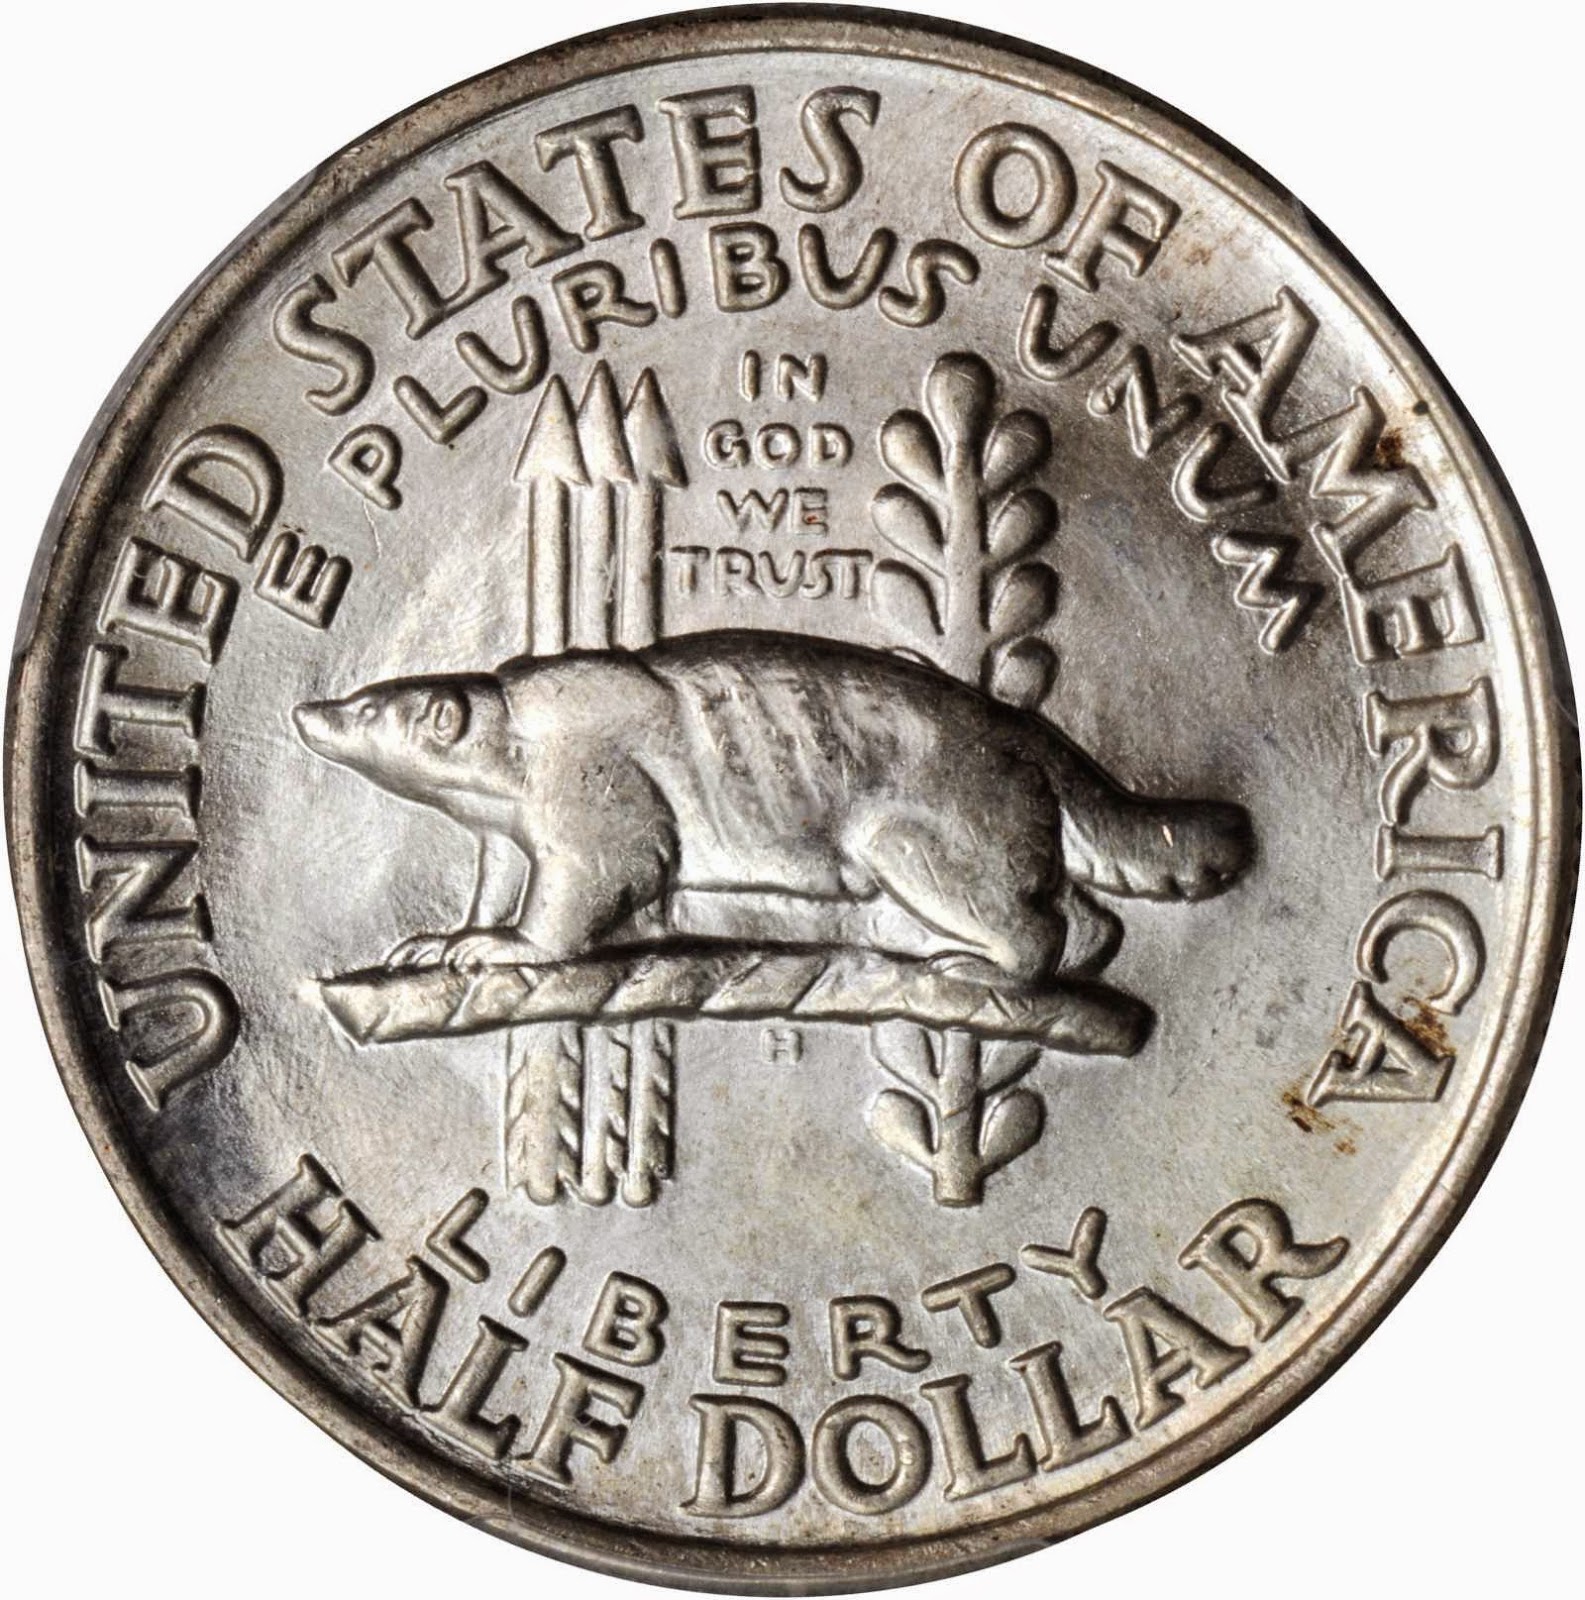 Wisconsin Territorial Centennial Half Dollar